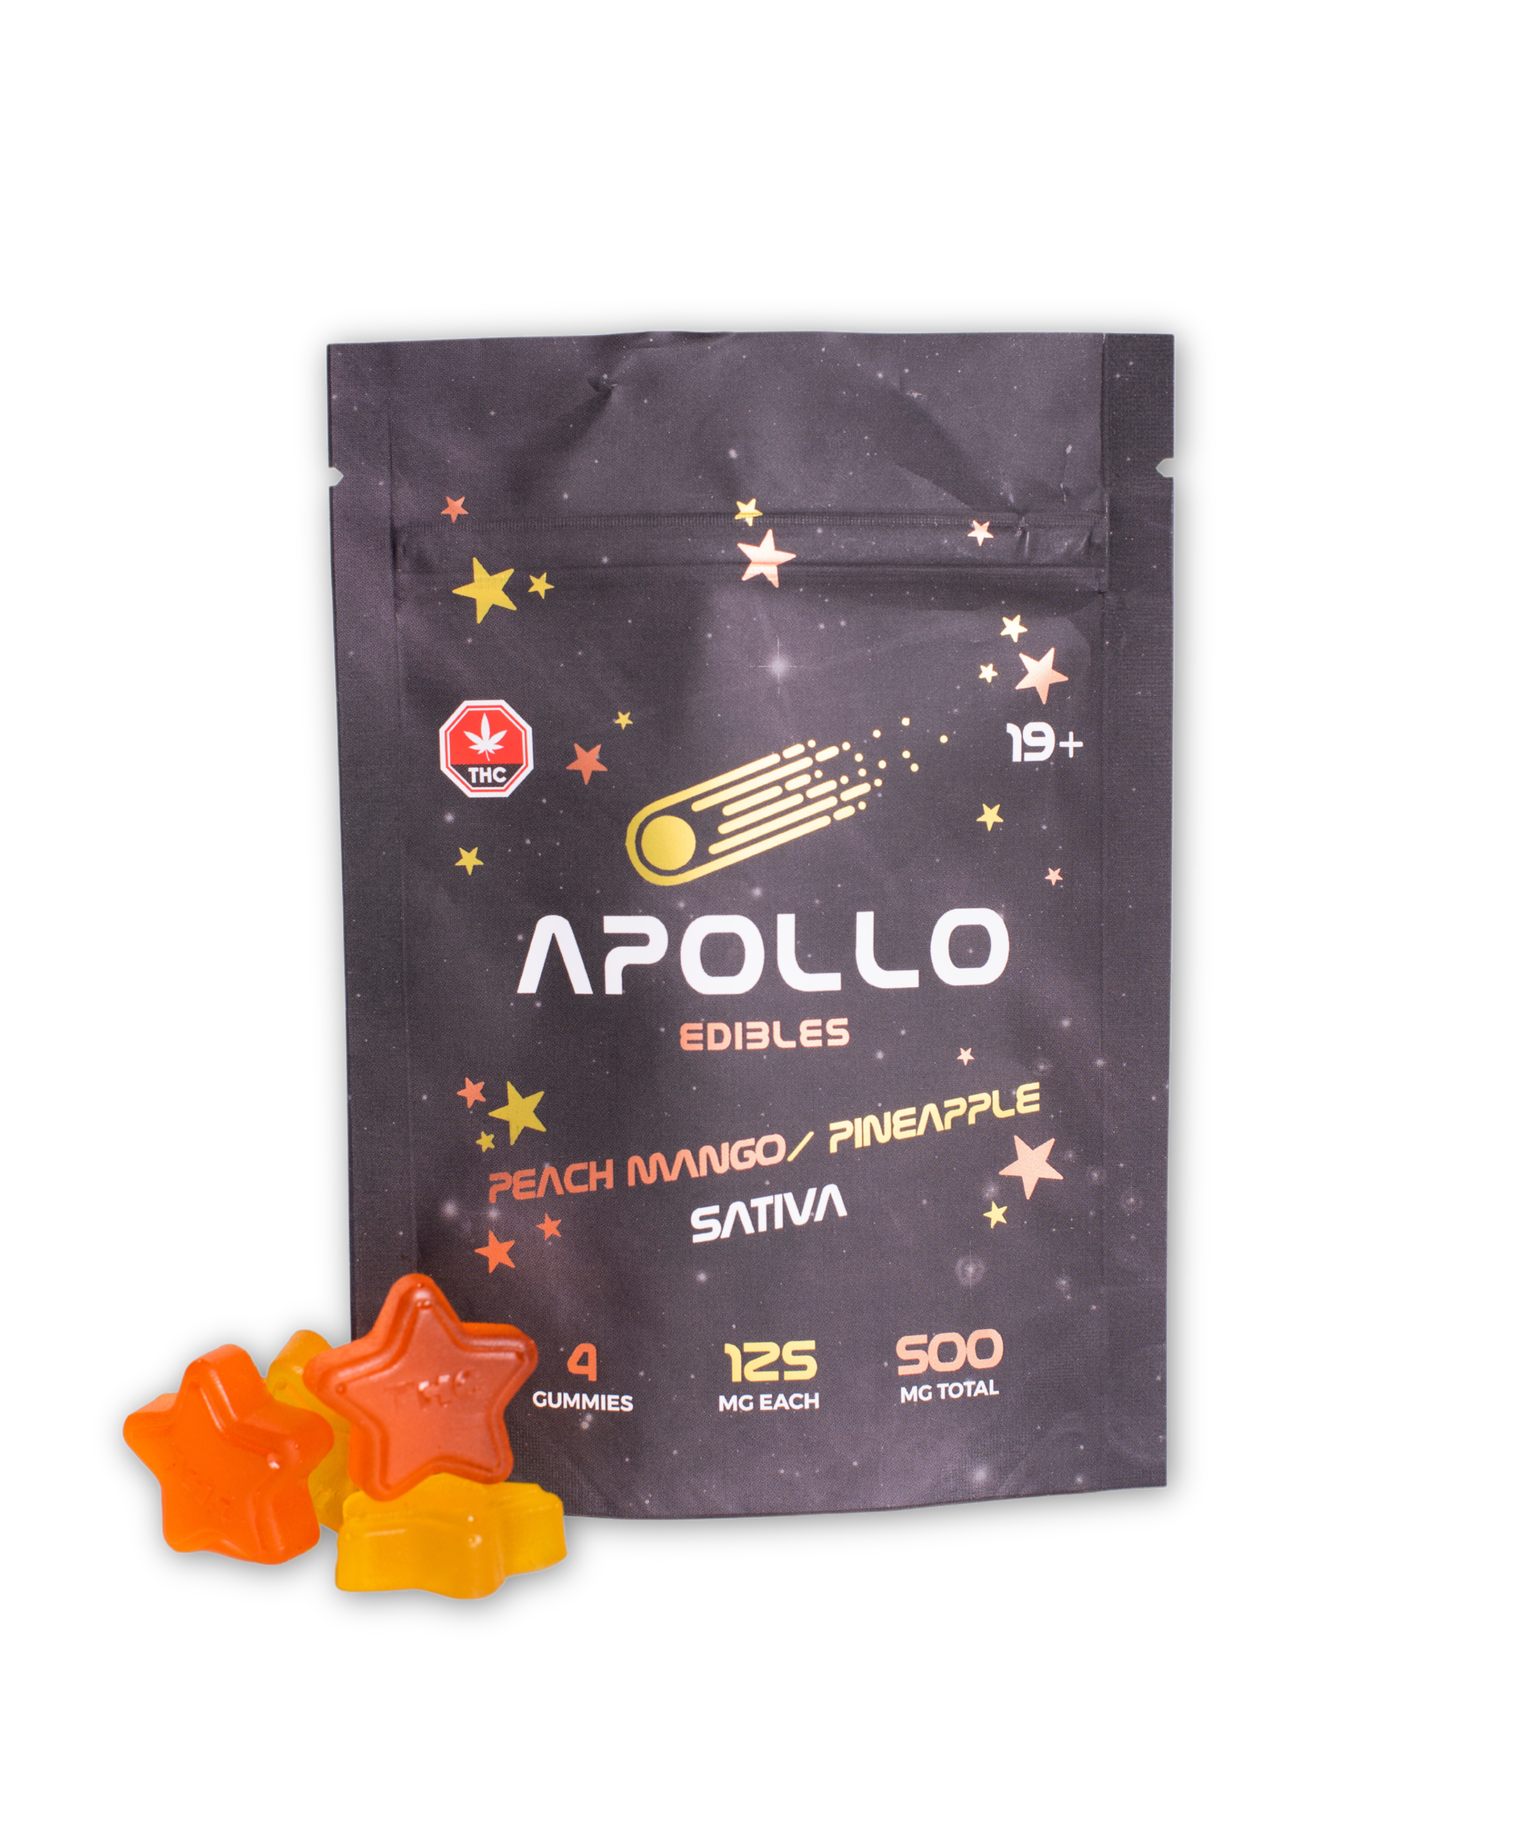 Buy Apollo Edibles - Peach Mango/Pineapple Shooting Stars 500mg THC Sativa at Wccannabis Online Shop